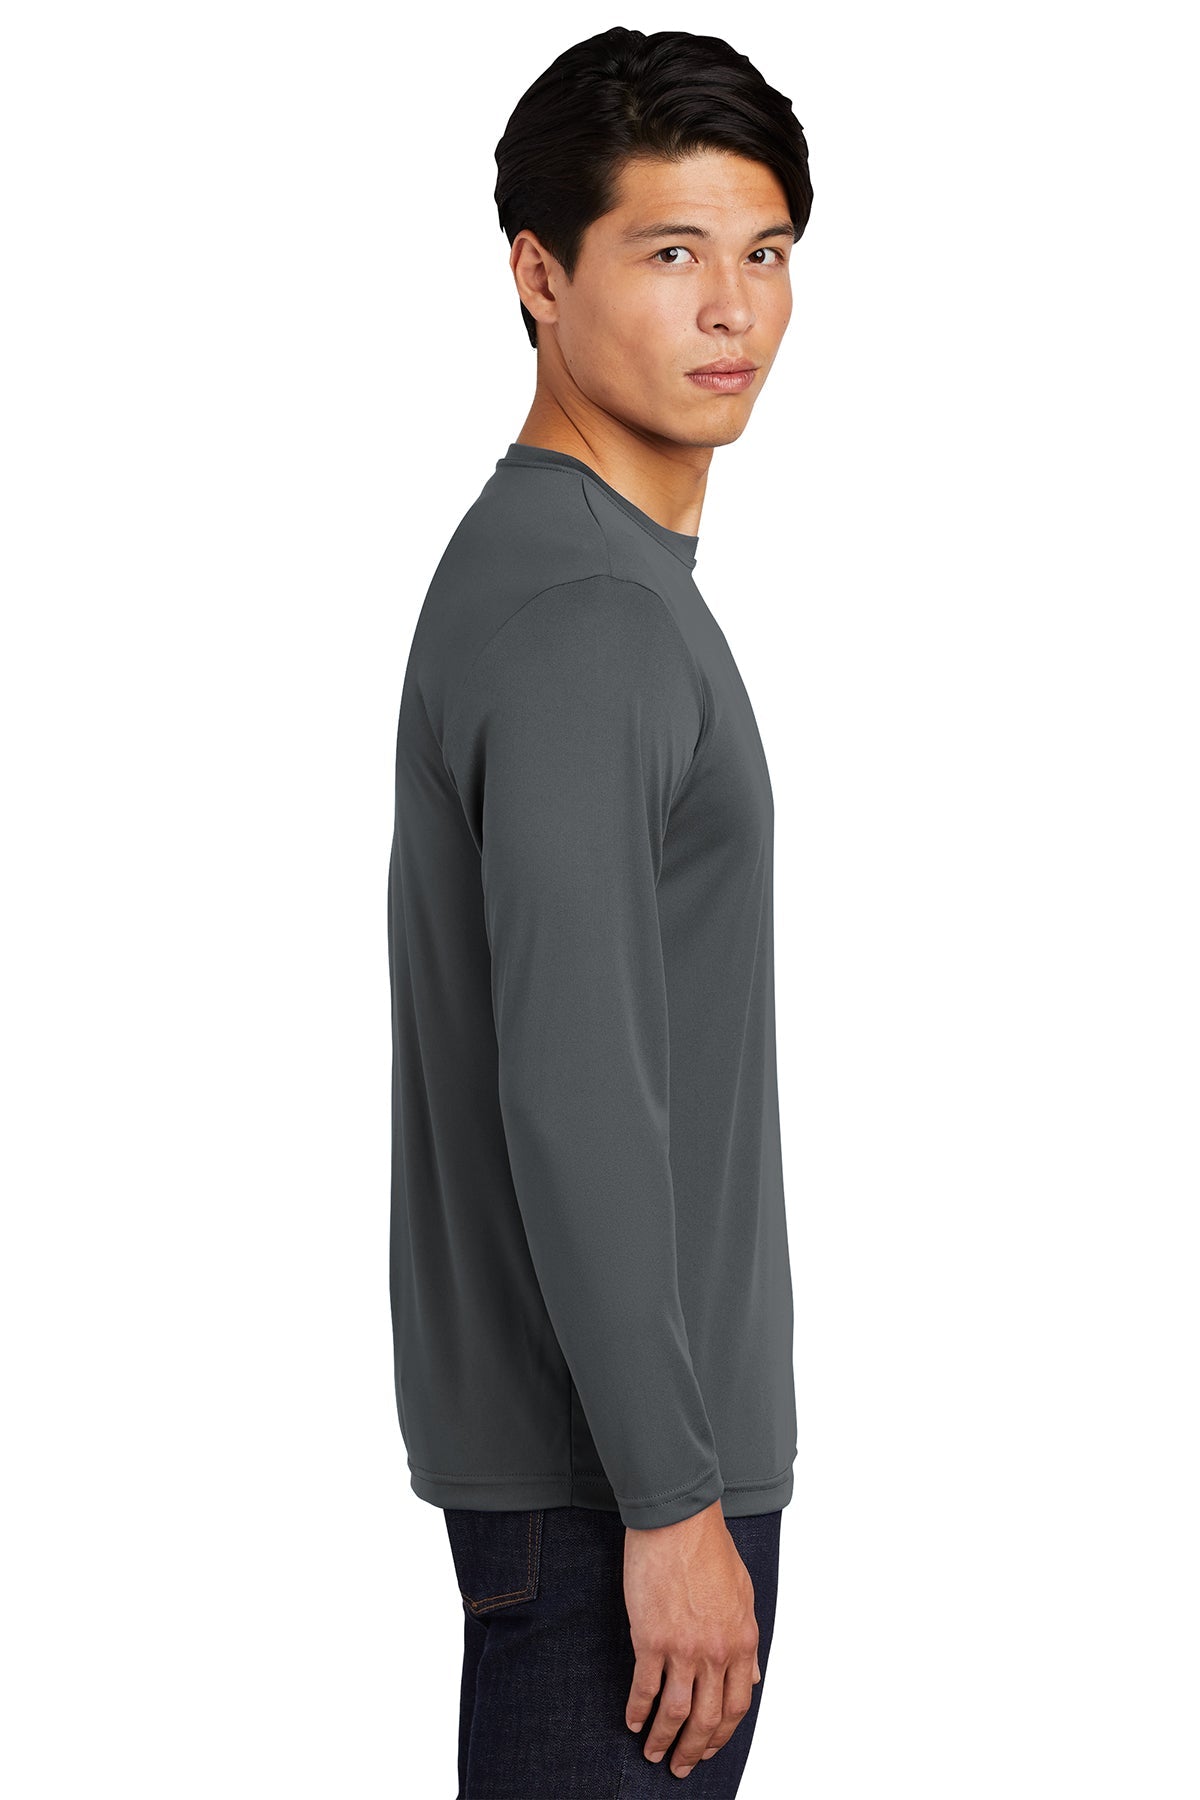 Sport-Tek PosiCharge Competitor Long Sleeve T-Shirt